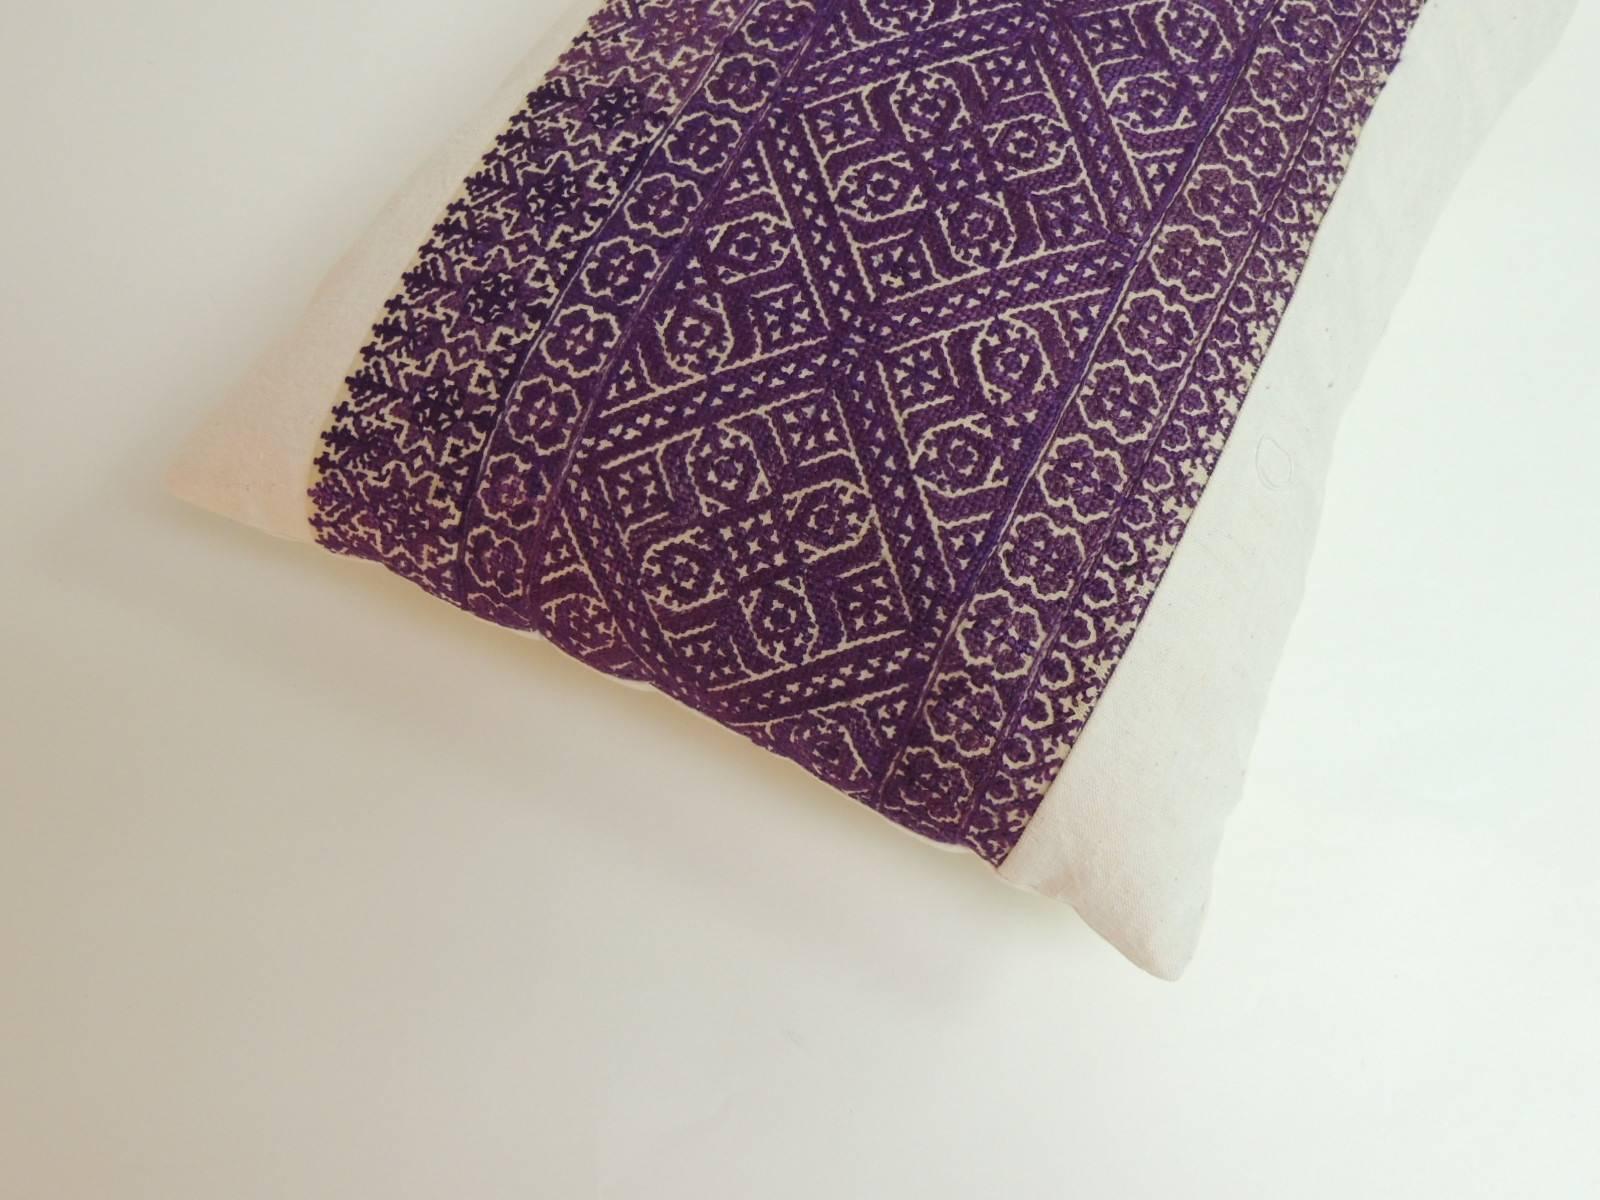 Moorish 19th Century Moroccan Embroidery Textile Decorative Bolster Pillow